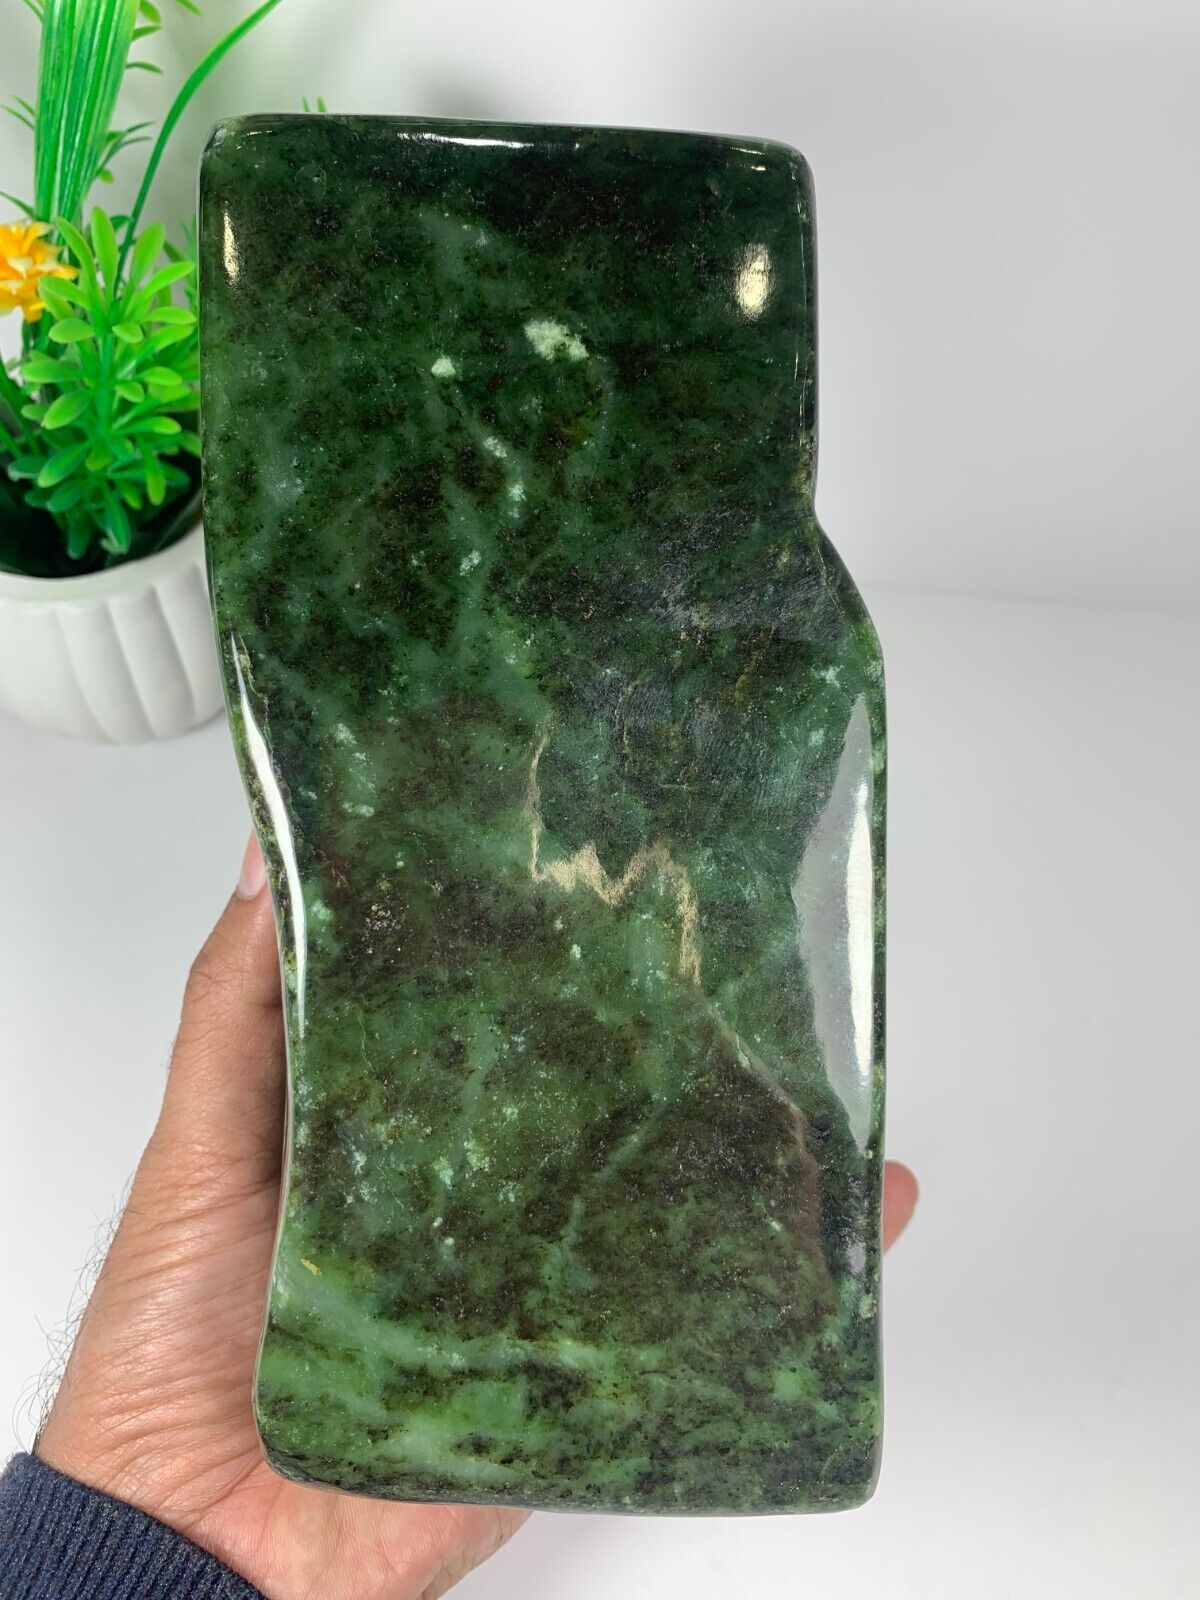 3490 Gram Nephrite Jade Rough Polished Stone Tumble Natural Freeform Crystal